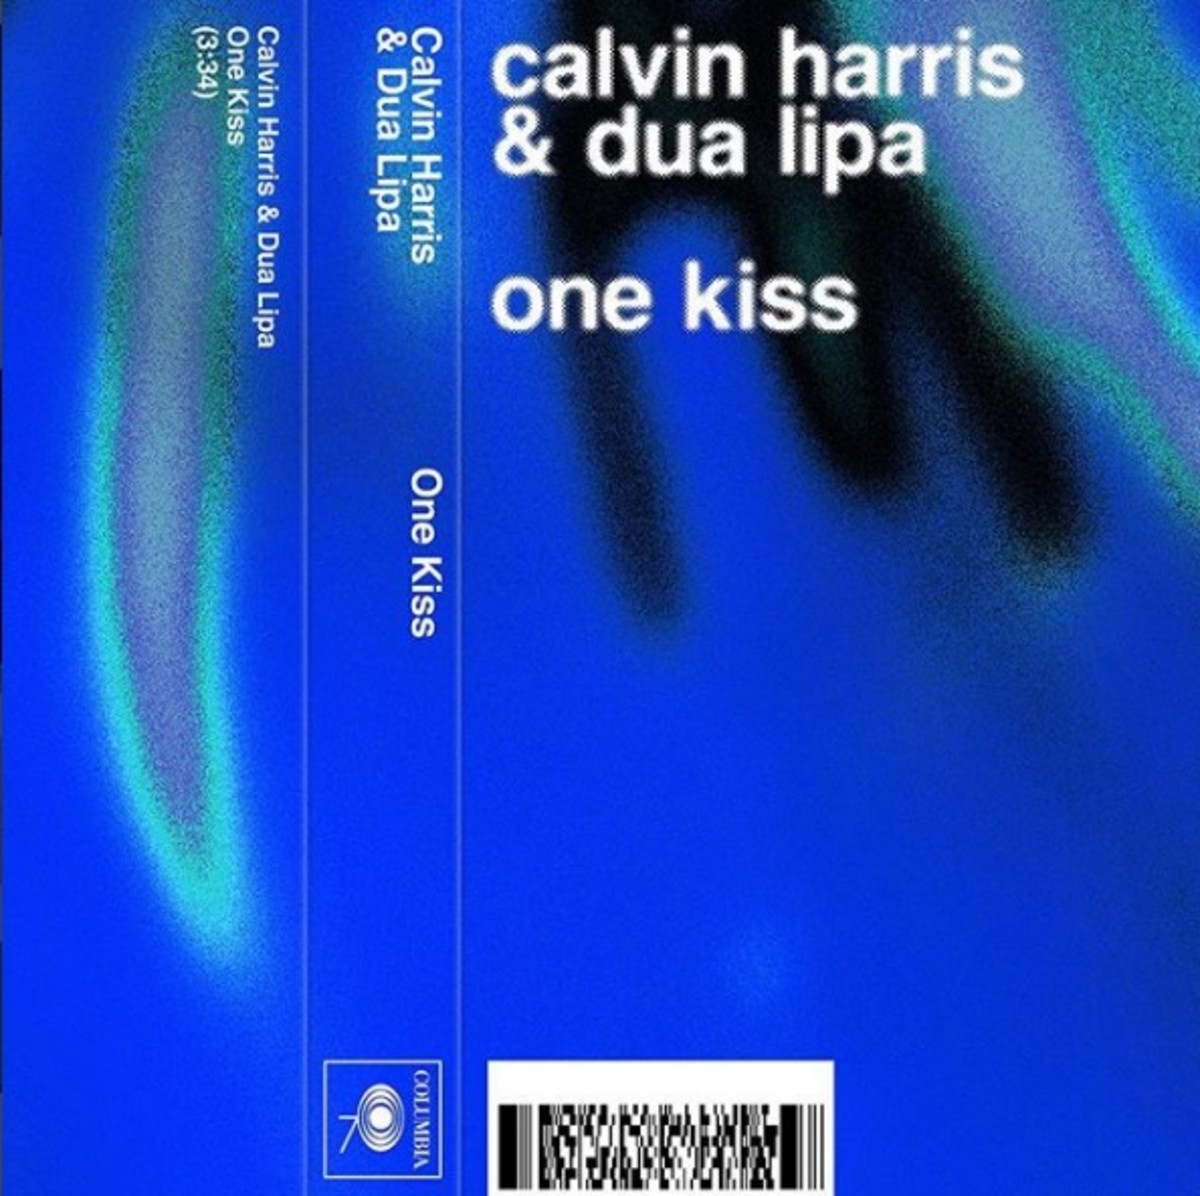 "One Kiss" by Calvin Harris and Dua Lipa